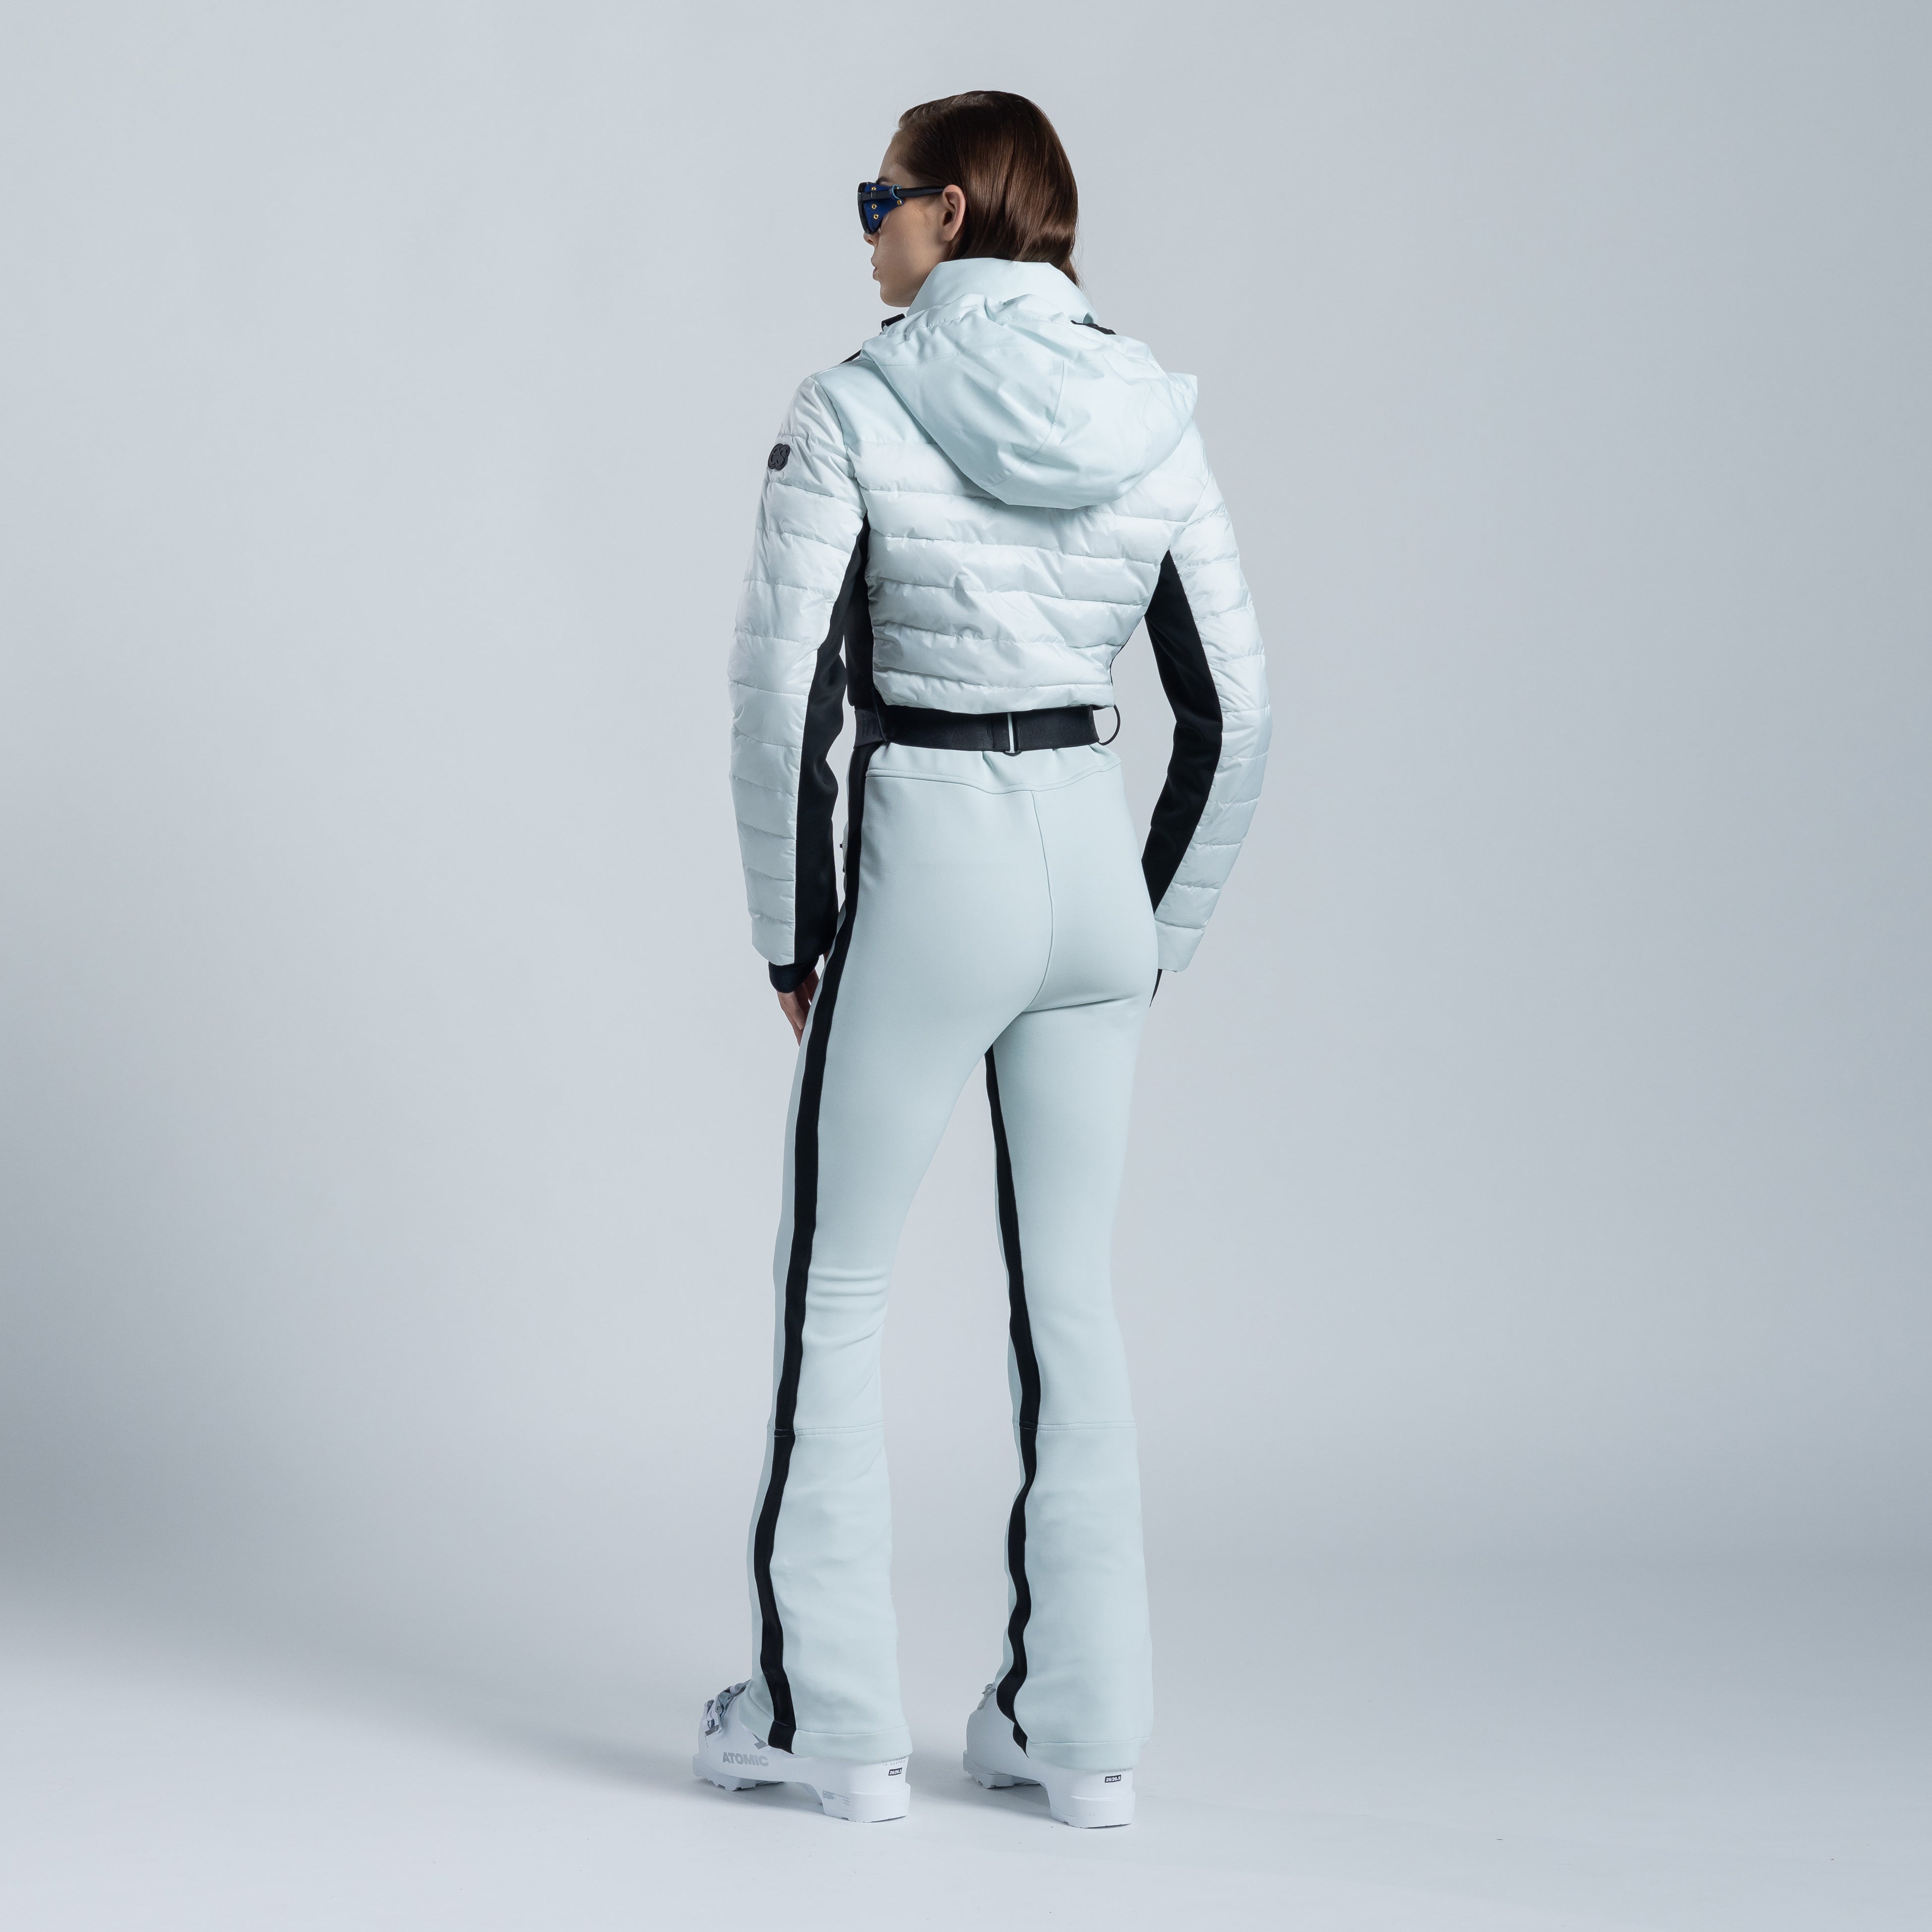 Erin Snow Eco Sporty Luna Ski Suit size 8 HoodevcPrimaLoft Waterproof NWT